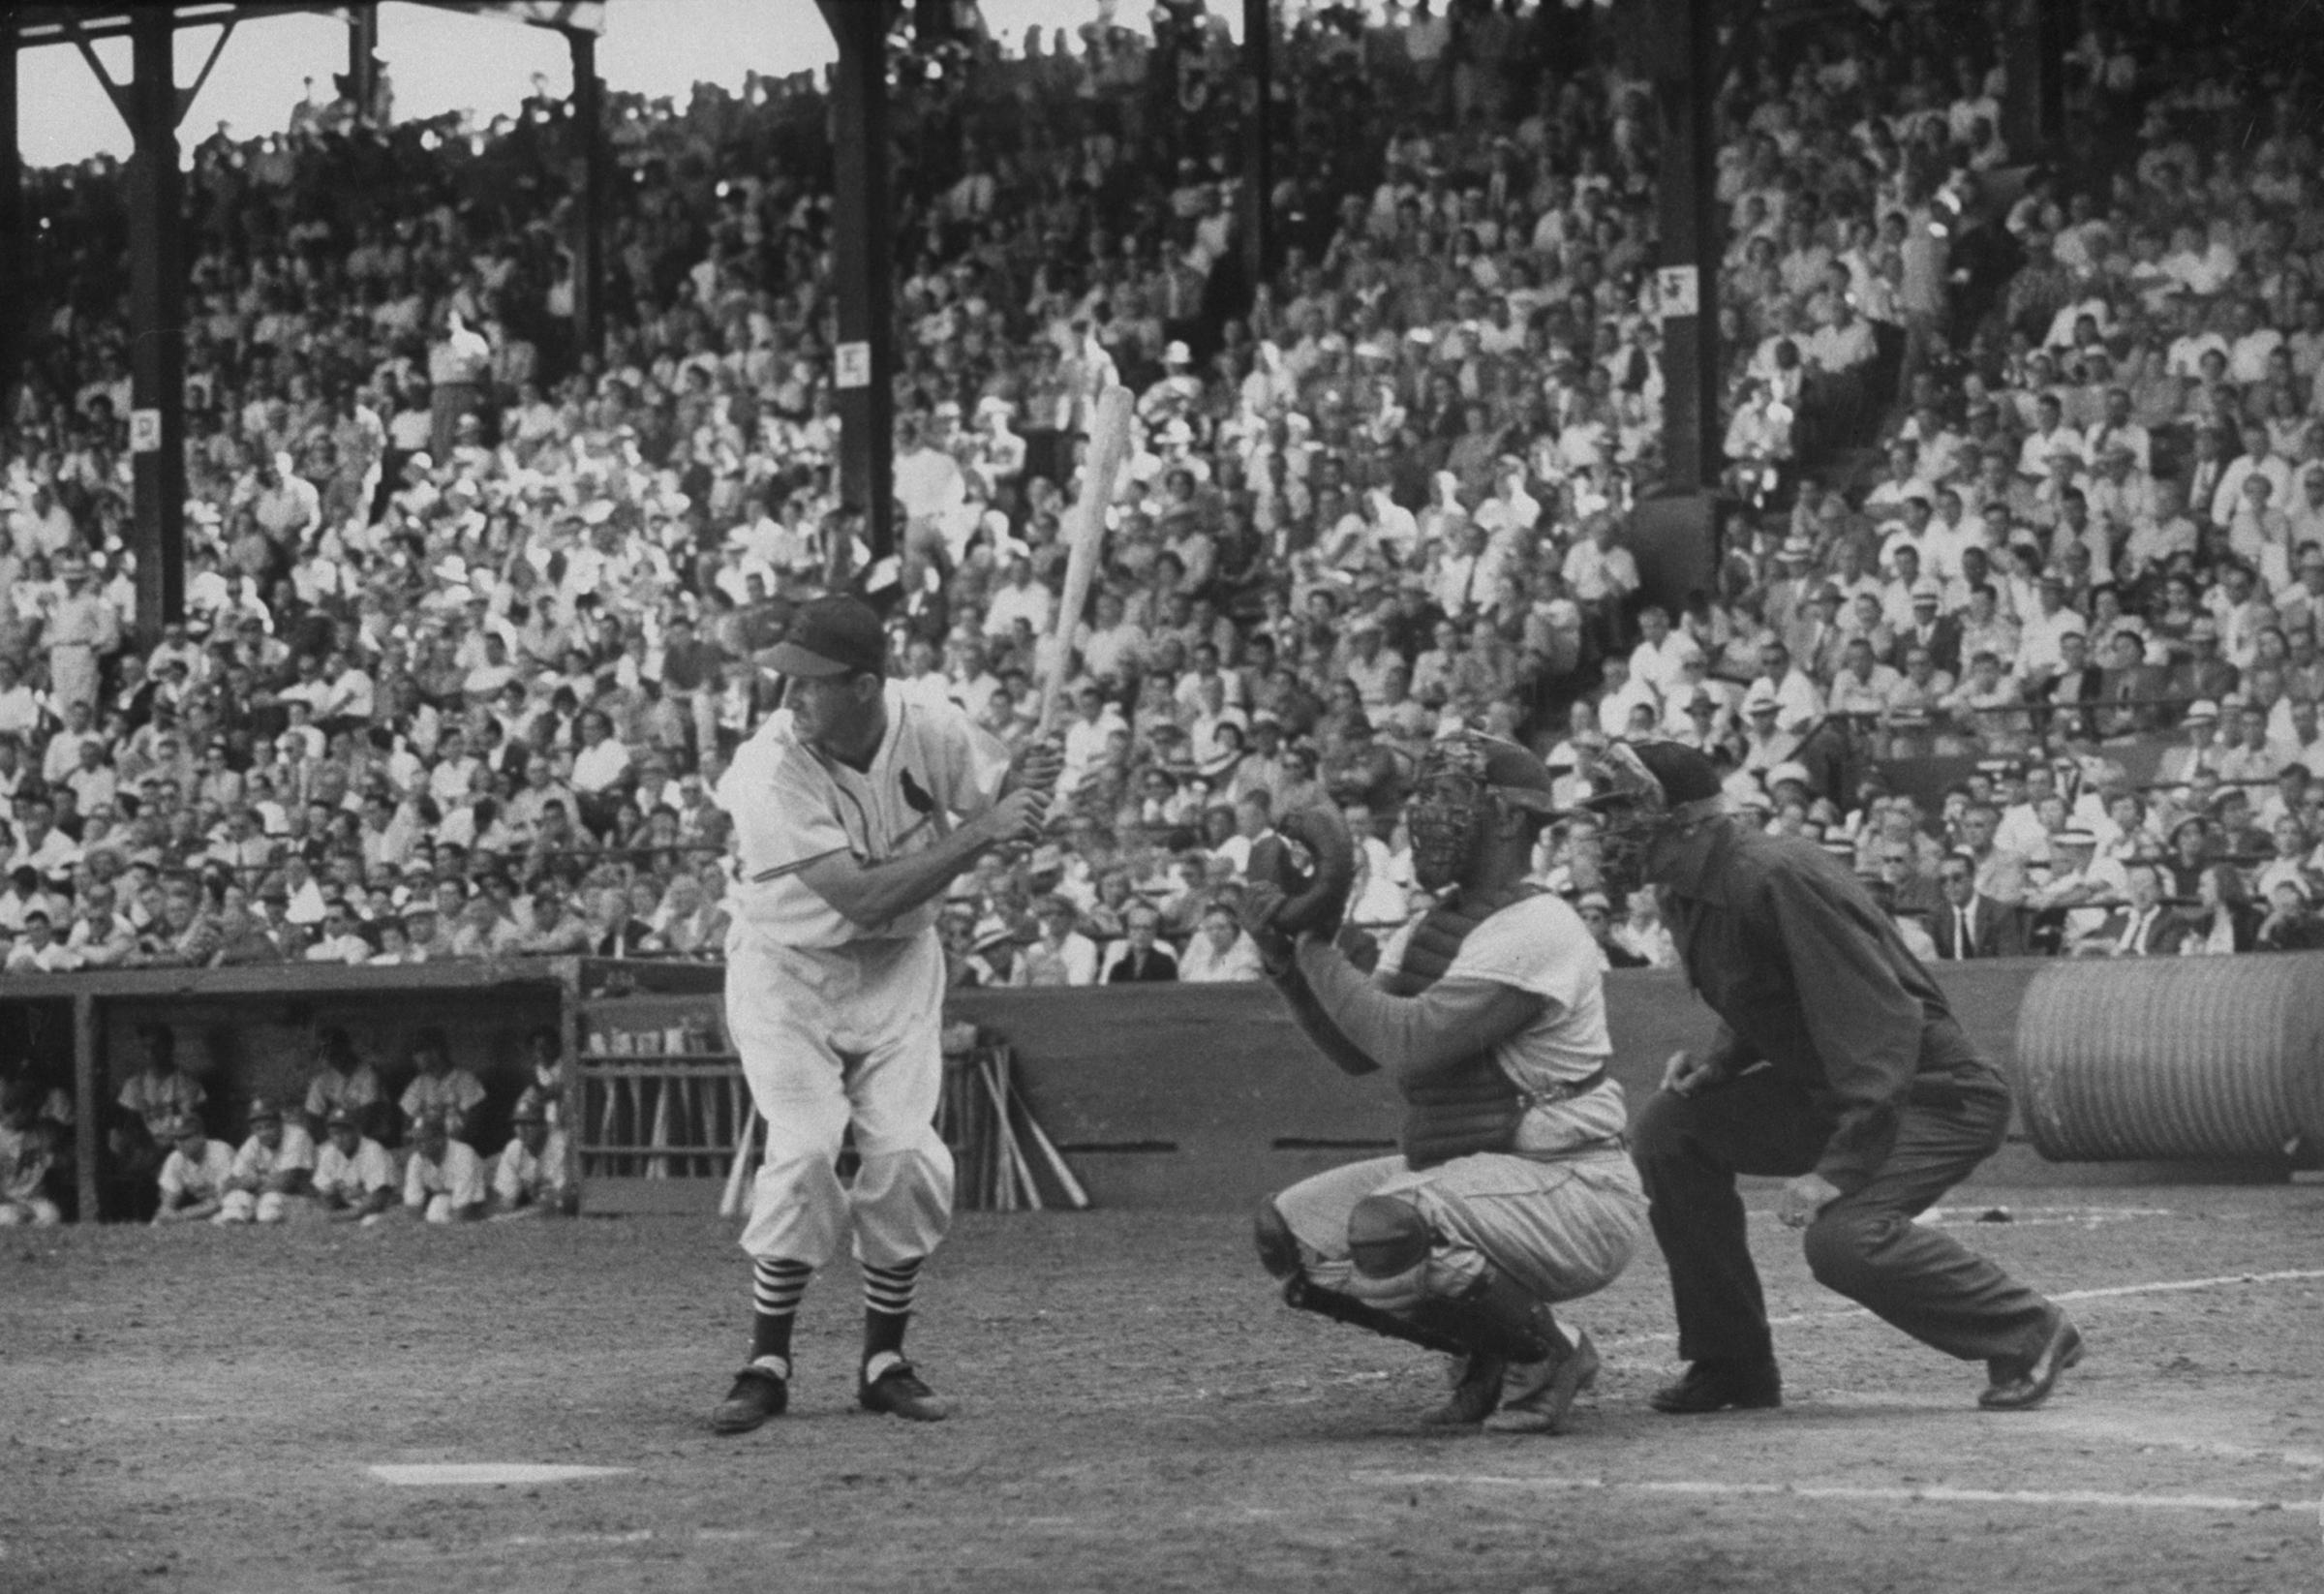 Stan Musial displays his seemingly awkward "knock-kneed" bating stance, 1952.